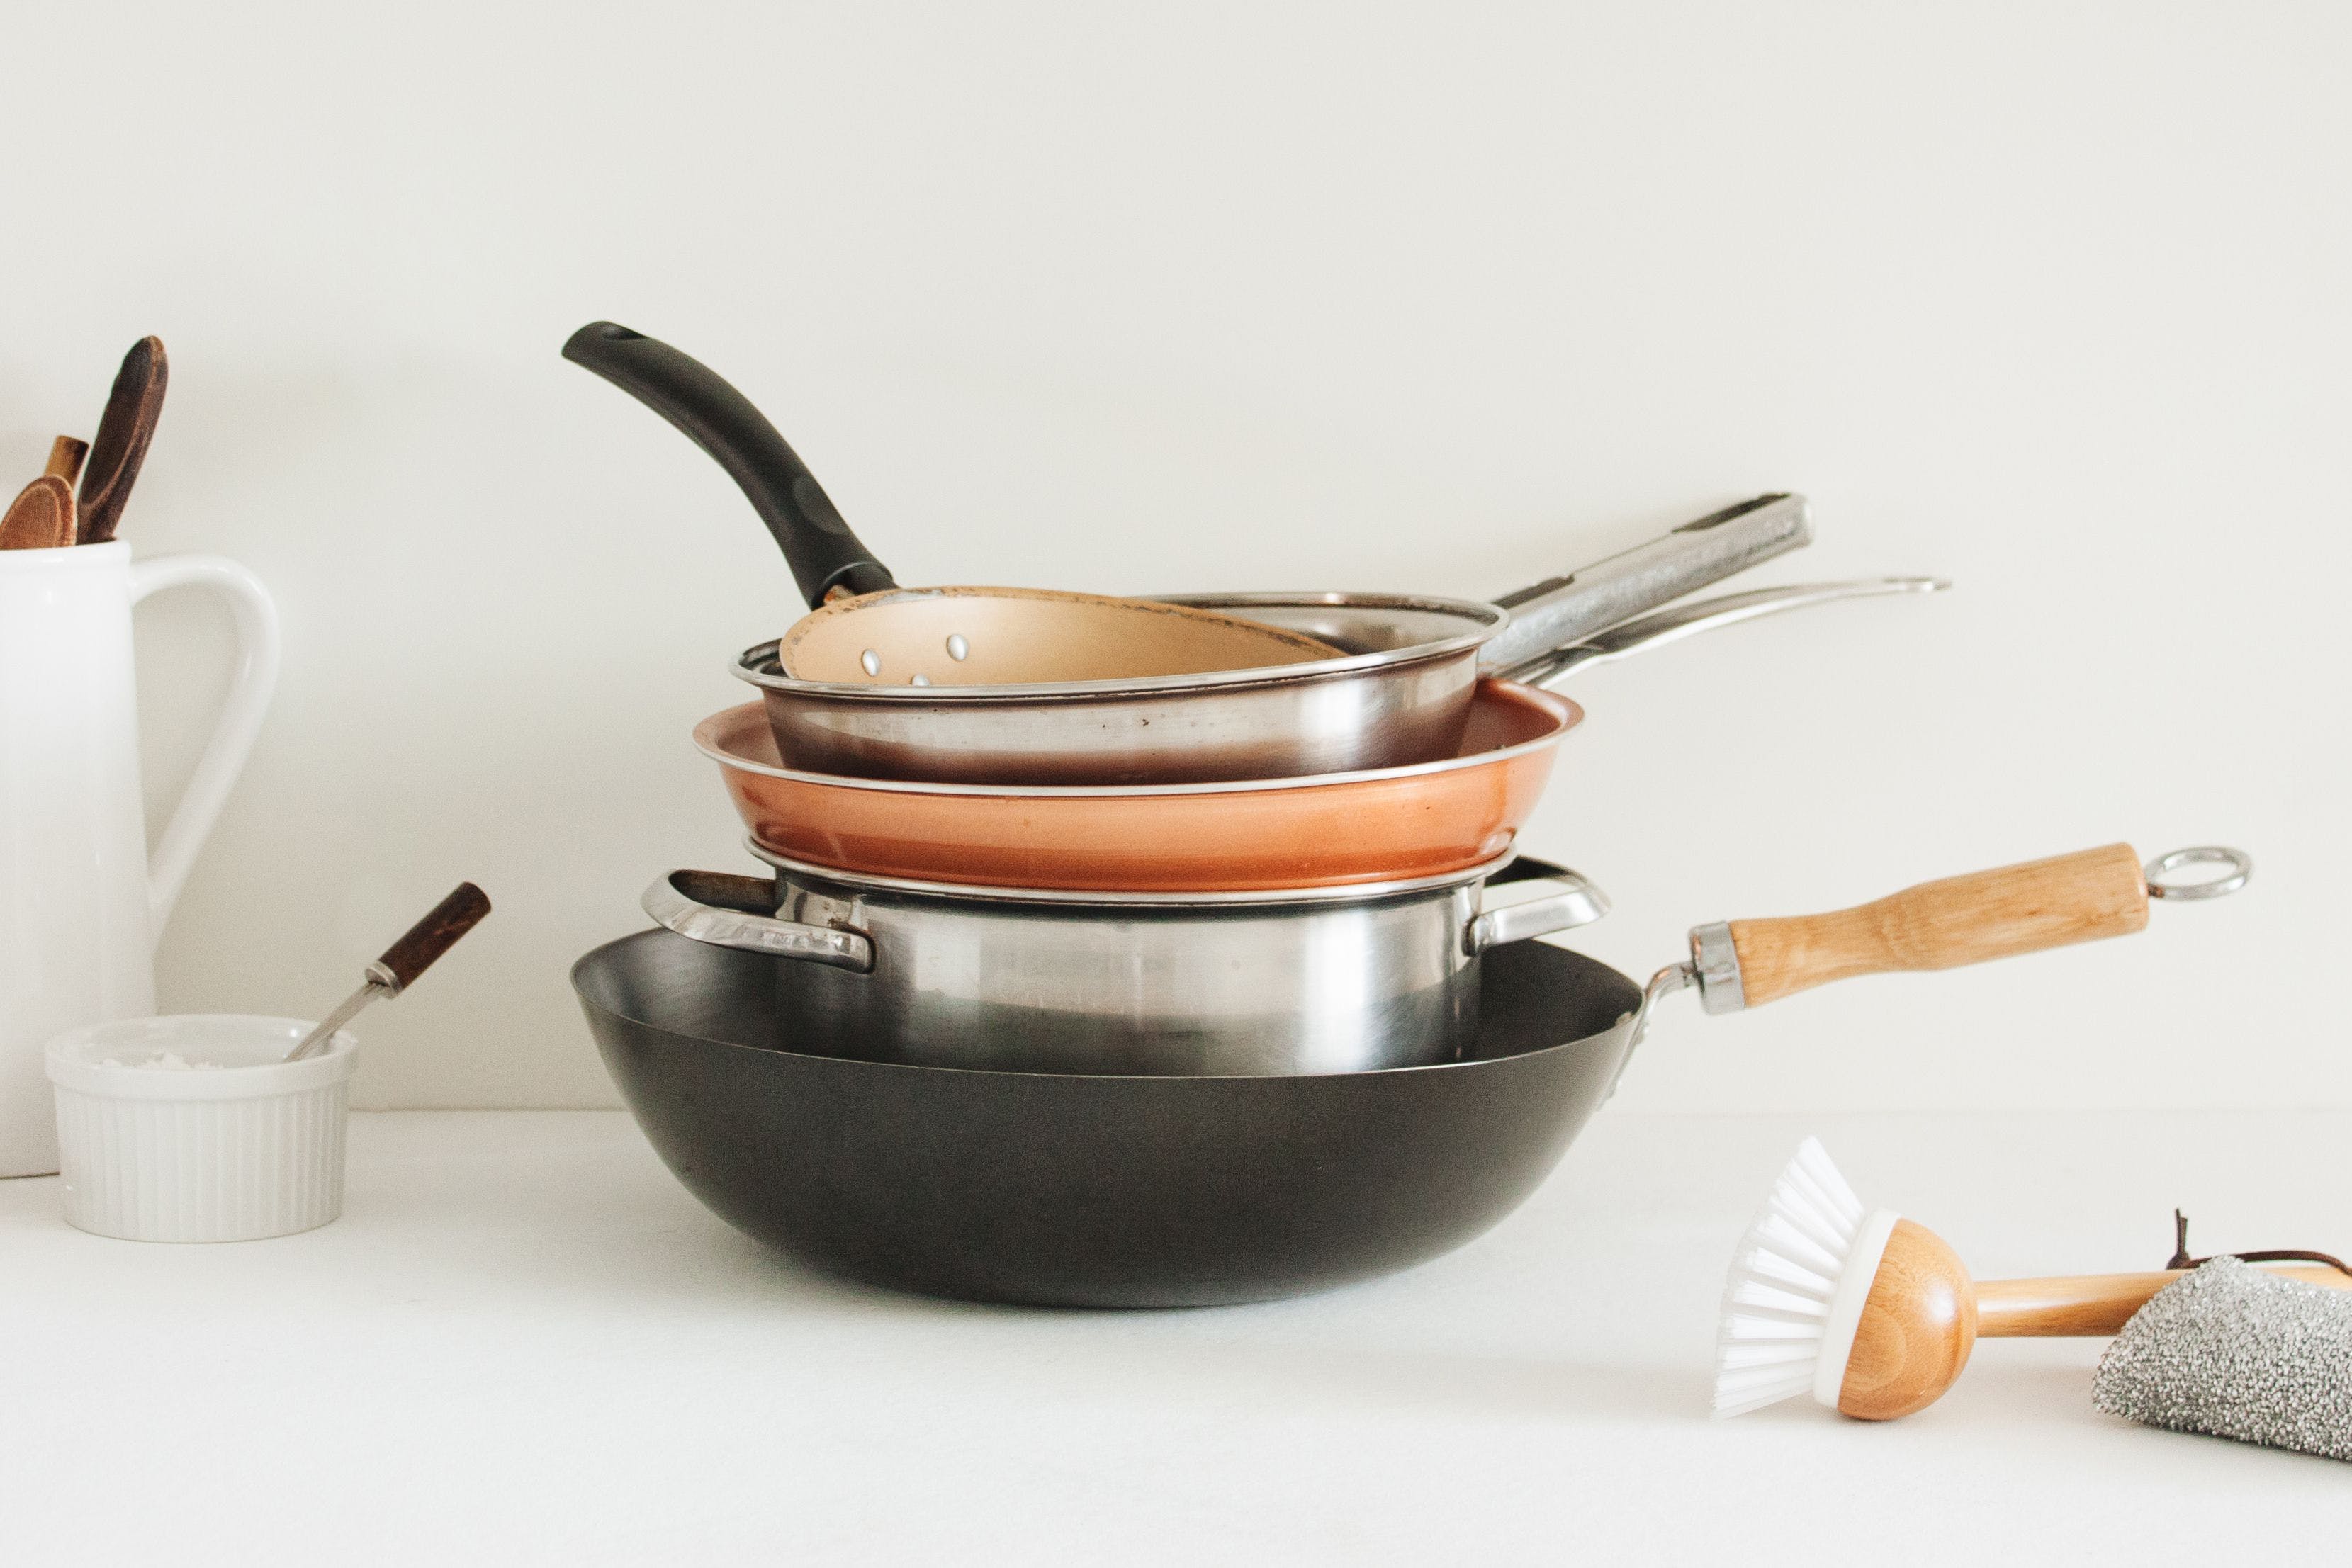 Cooking tip: Don't burn the nonstick pan